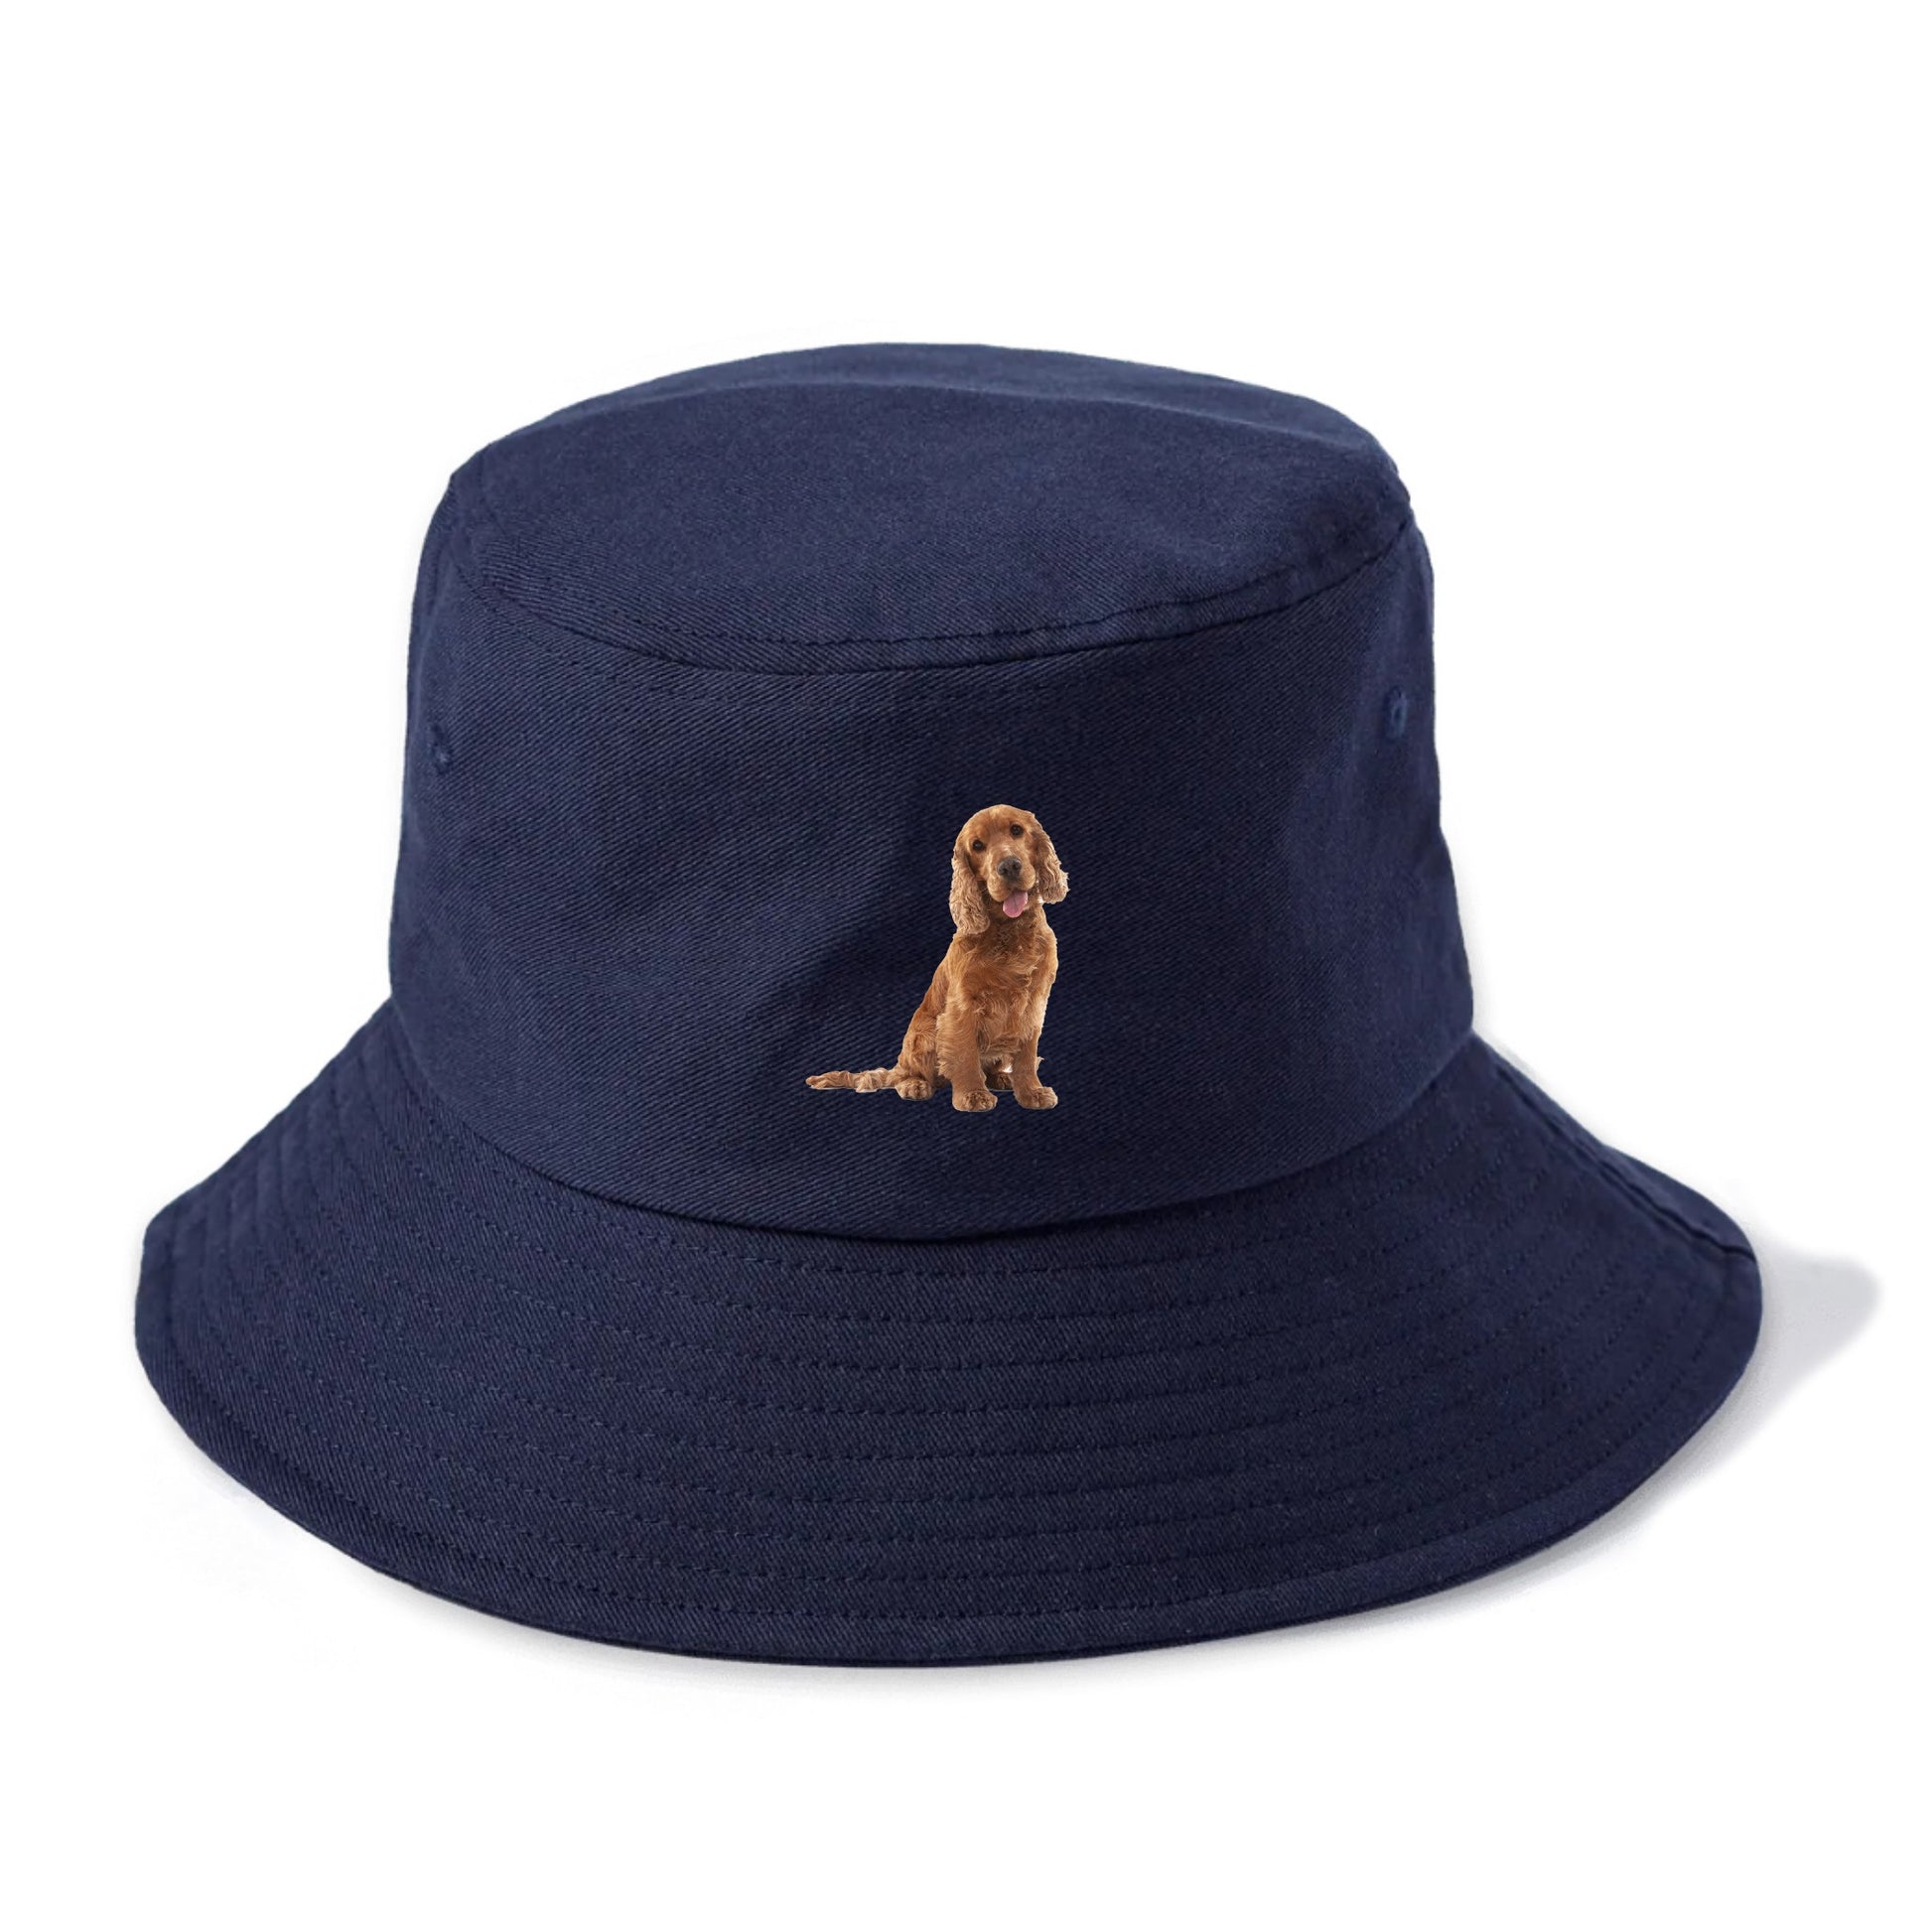 Cocker Spaniel Hat